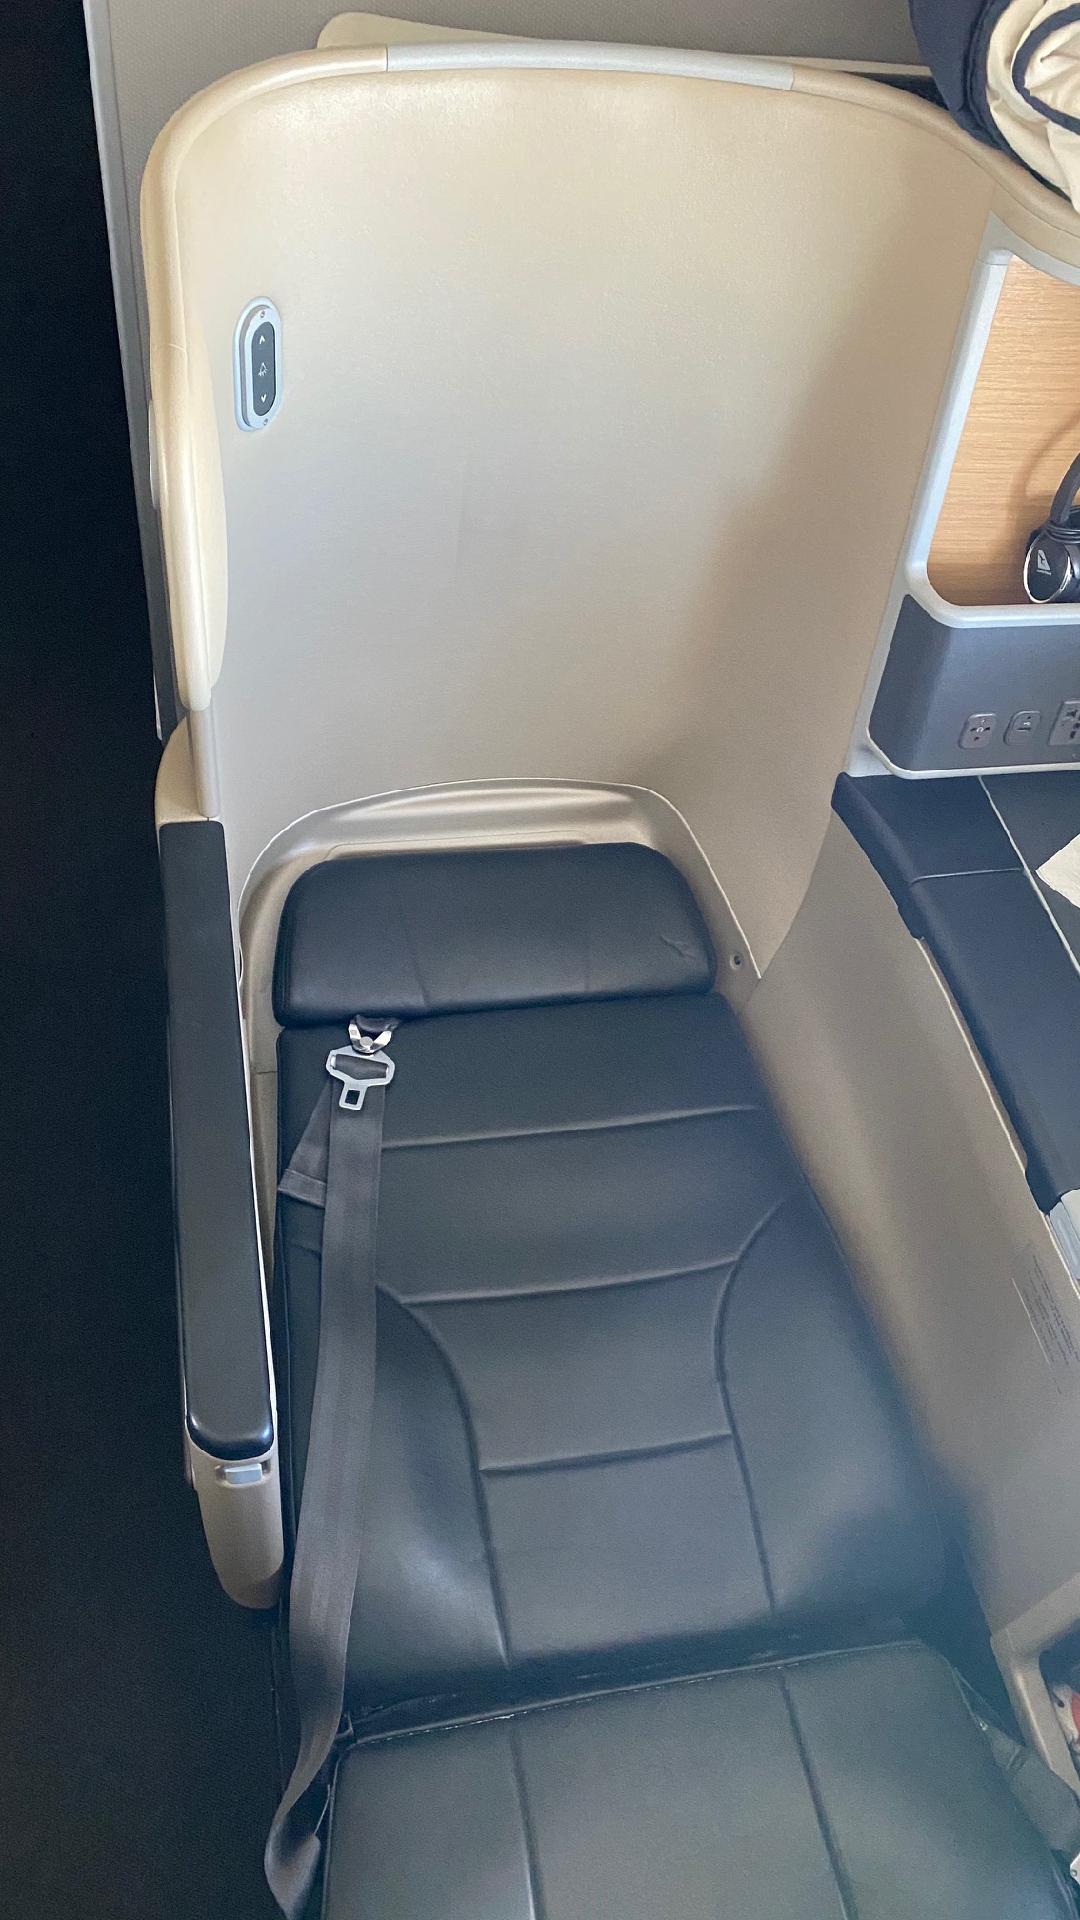 Qantas A-330 Business Class Seat, Bed mode